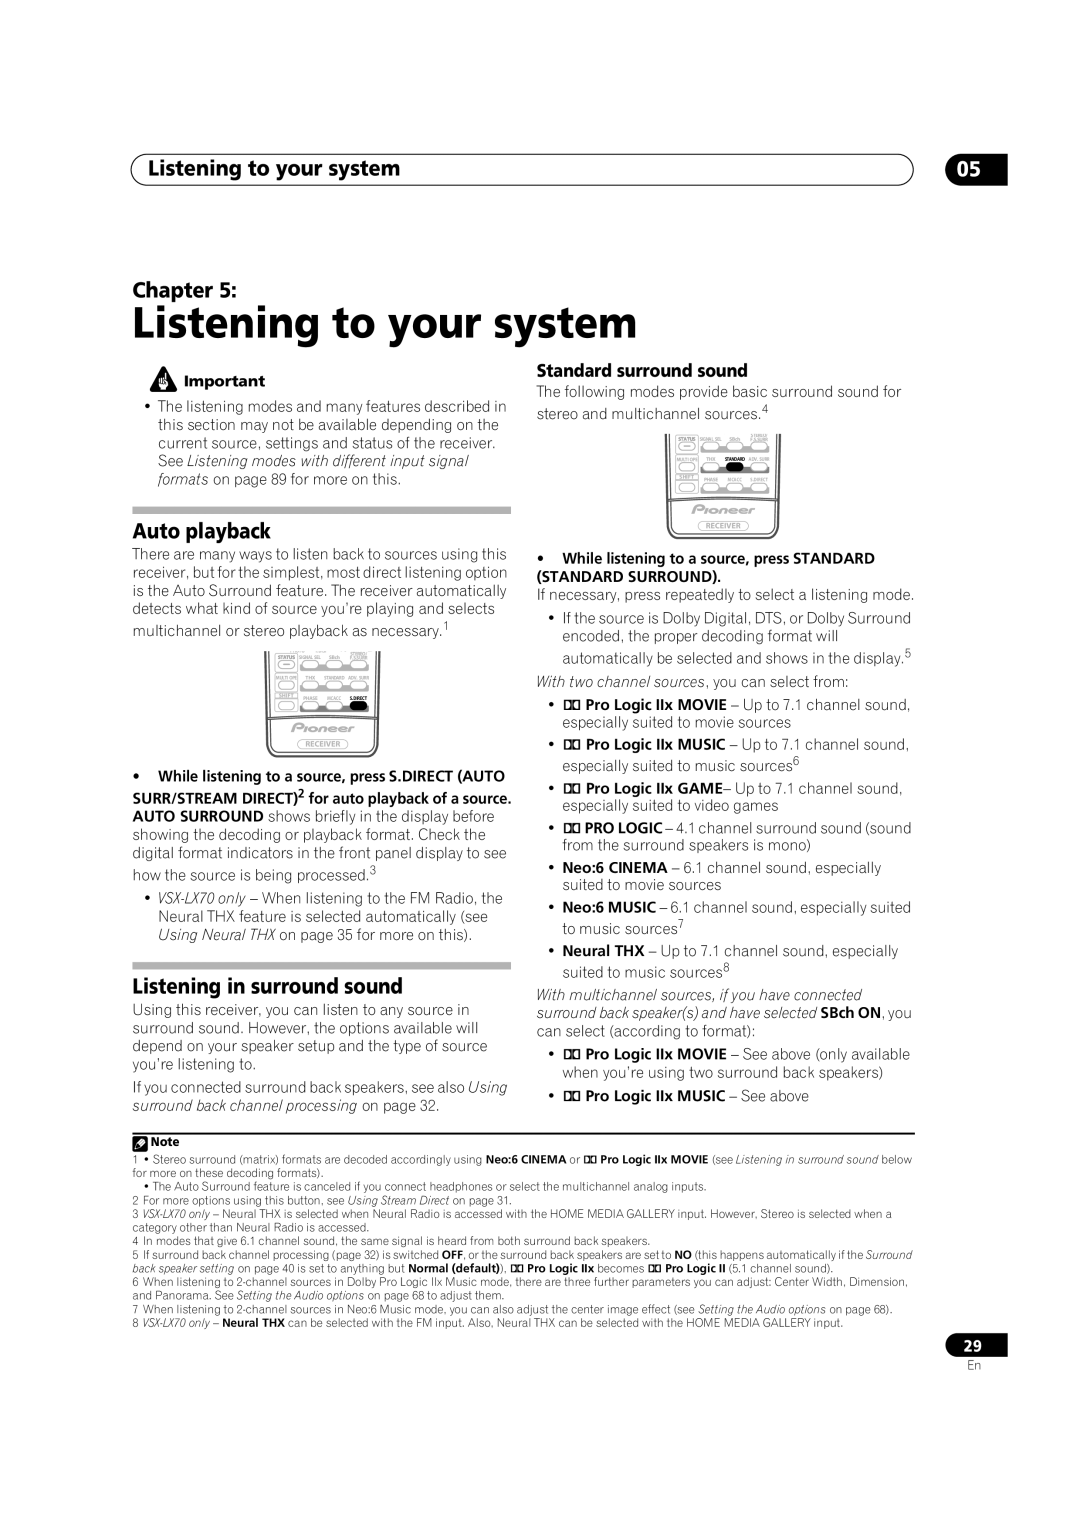 Pioneer VSX-LX70 Listening to your system, Auto playback, Listening in surround sound, Standard surround sound, Chapter 